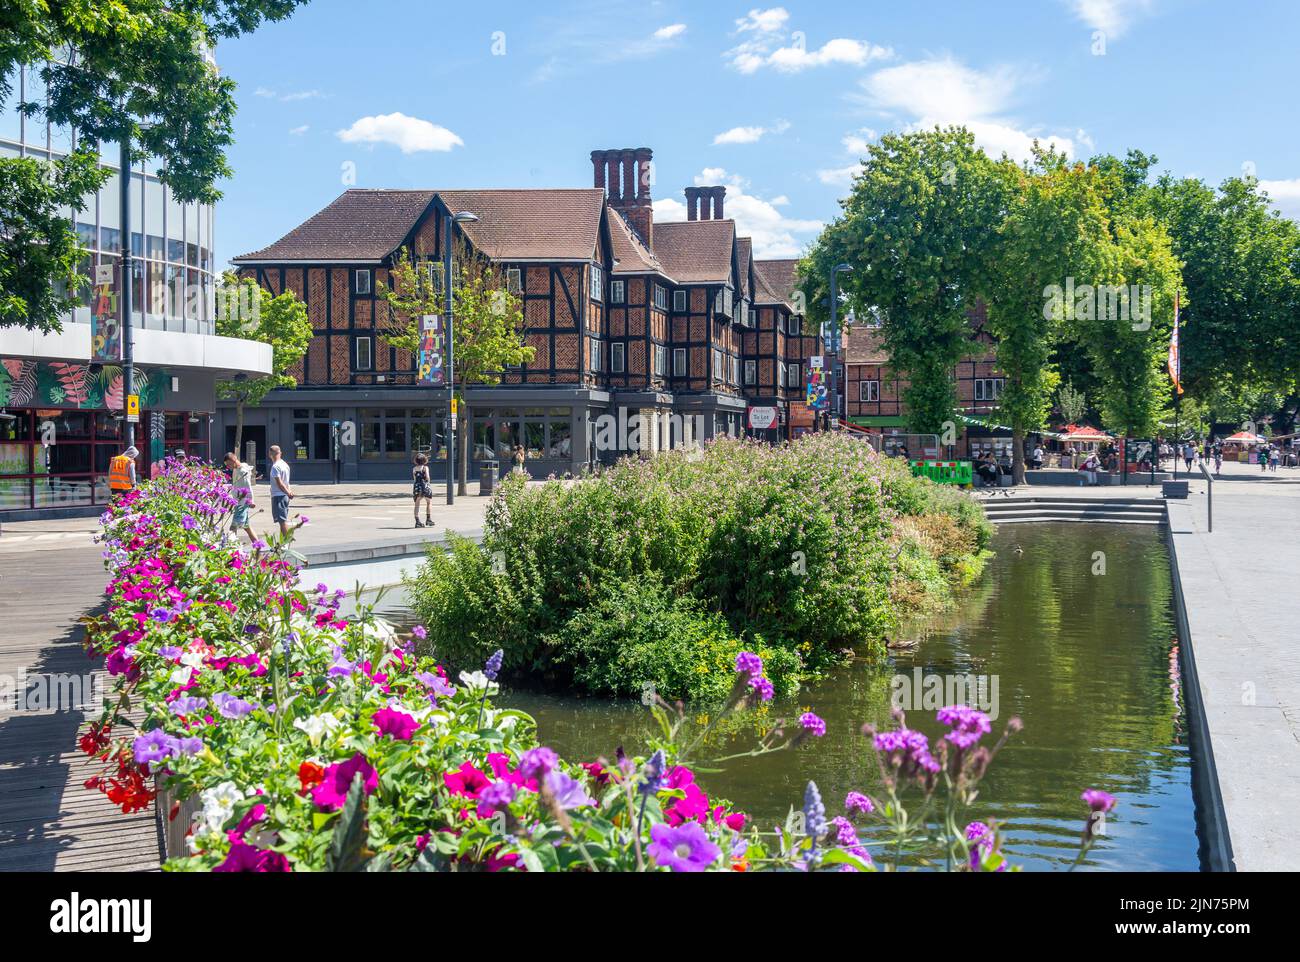 The Pond on The High Street, Watford, Hertfordshire, England, United Kingdom Stock Photo